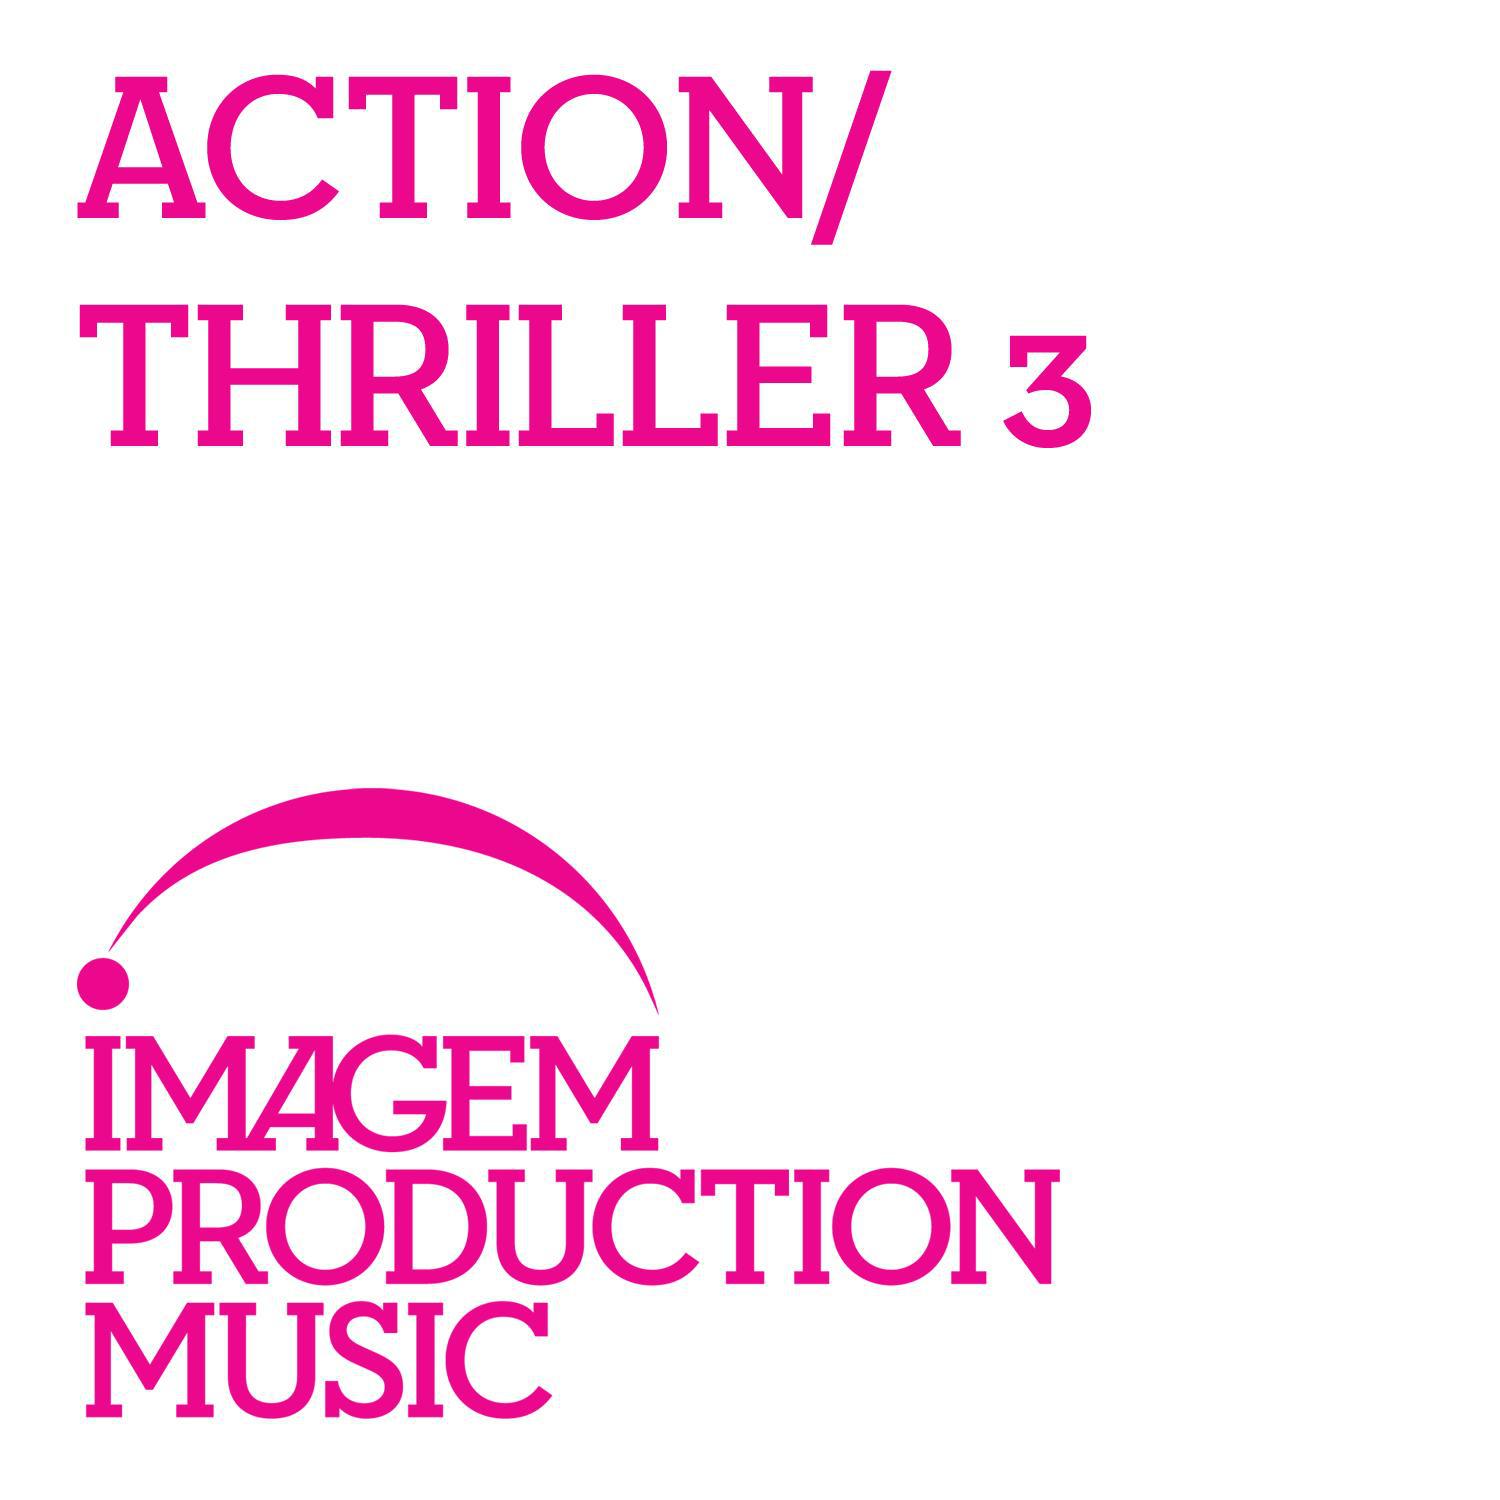 Action/Thriller 3 - Film Trailer Music专辑